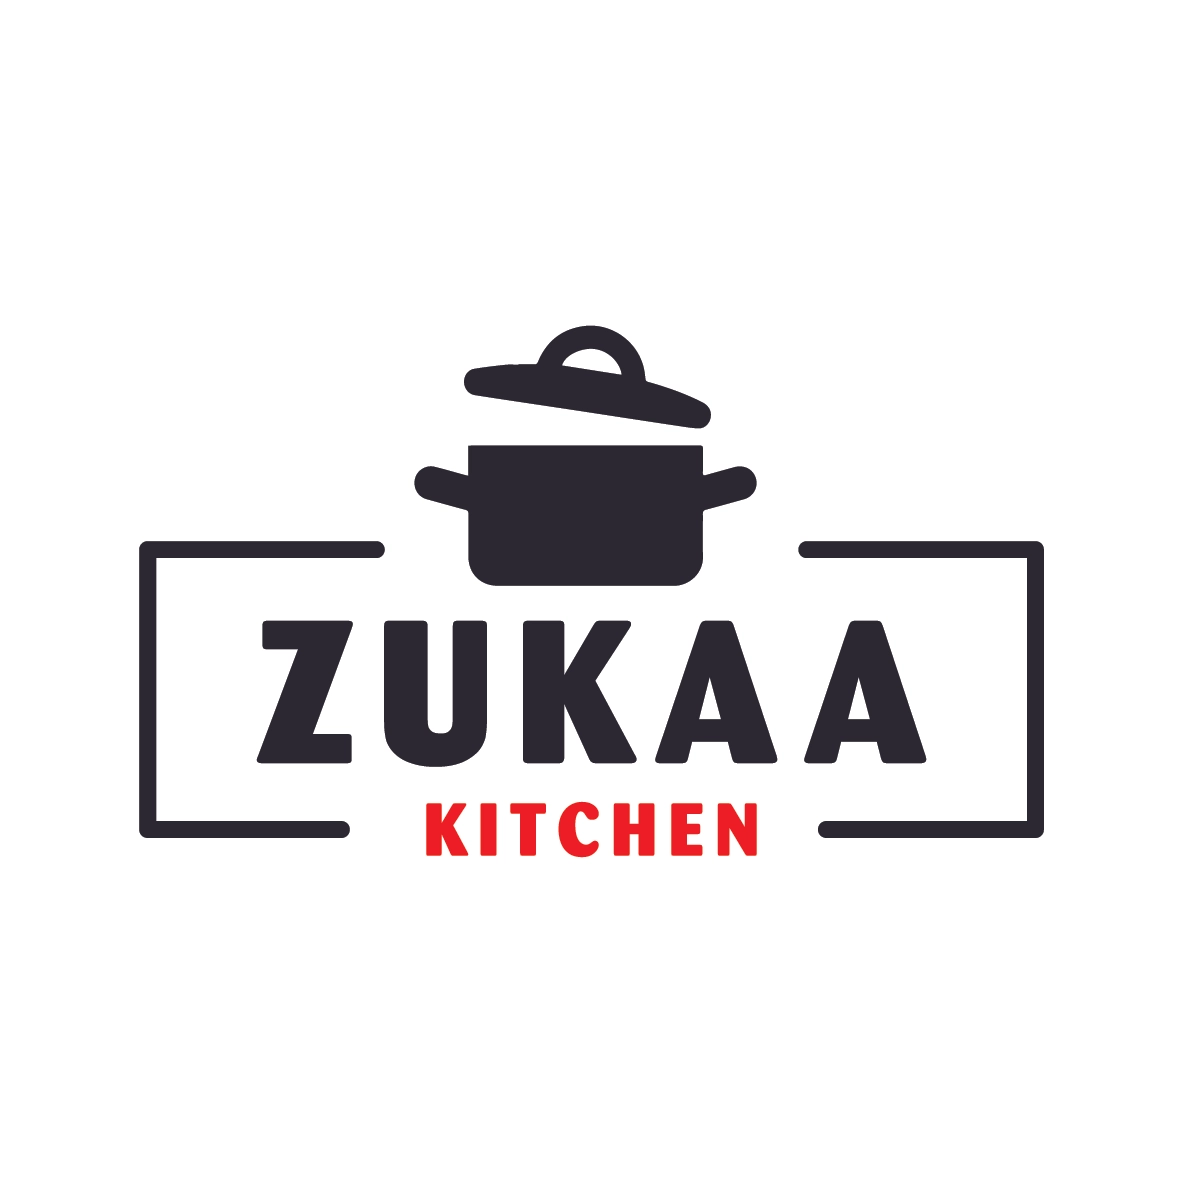 Zukaa Kitchen Logo